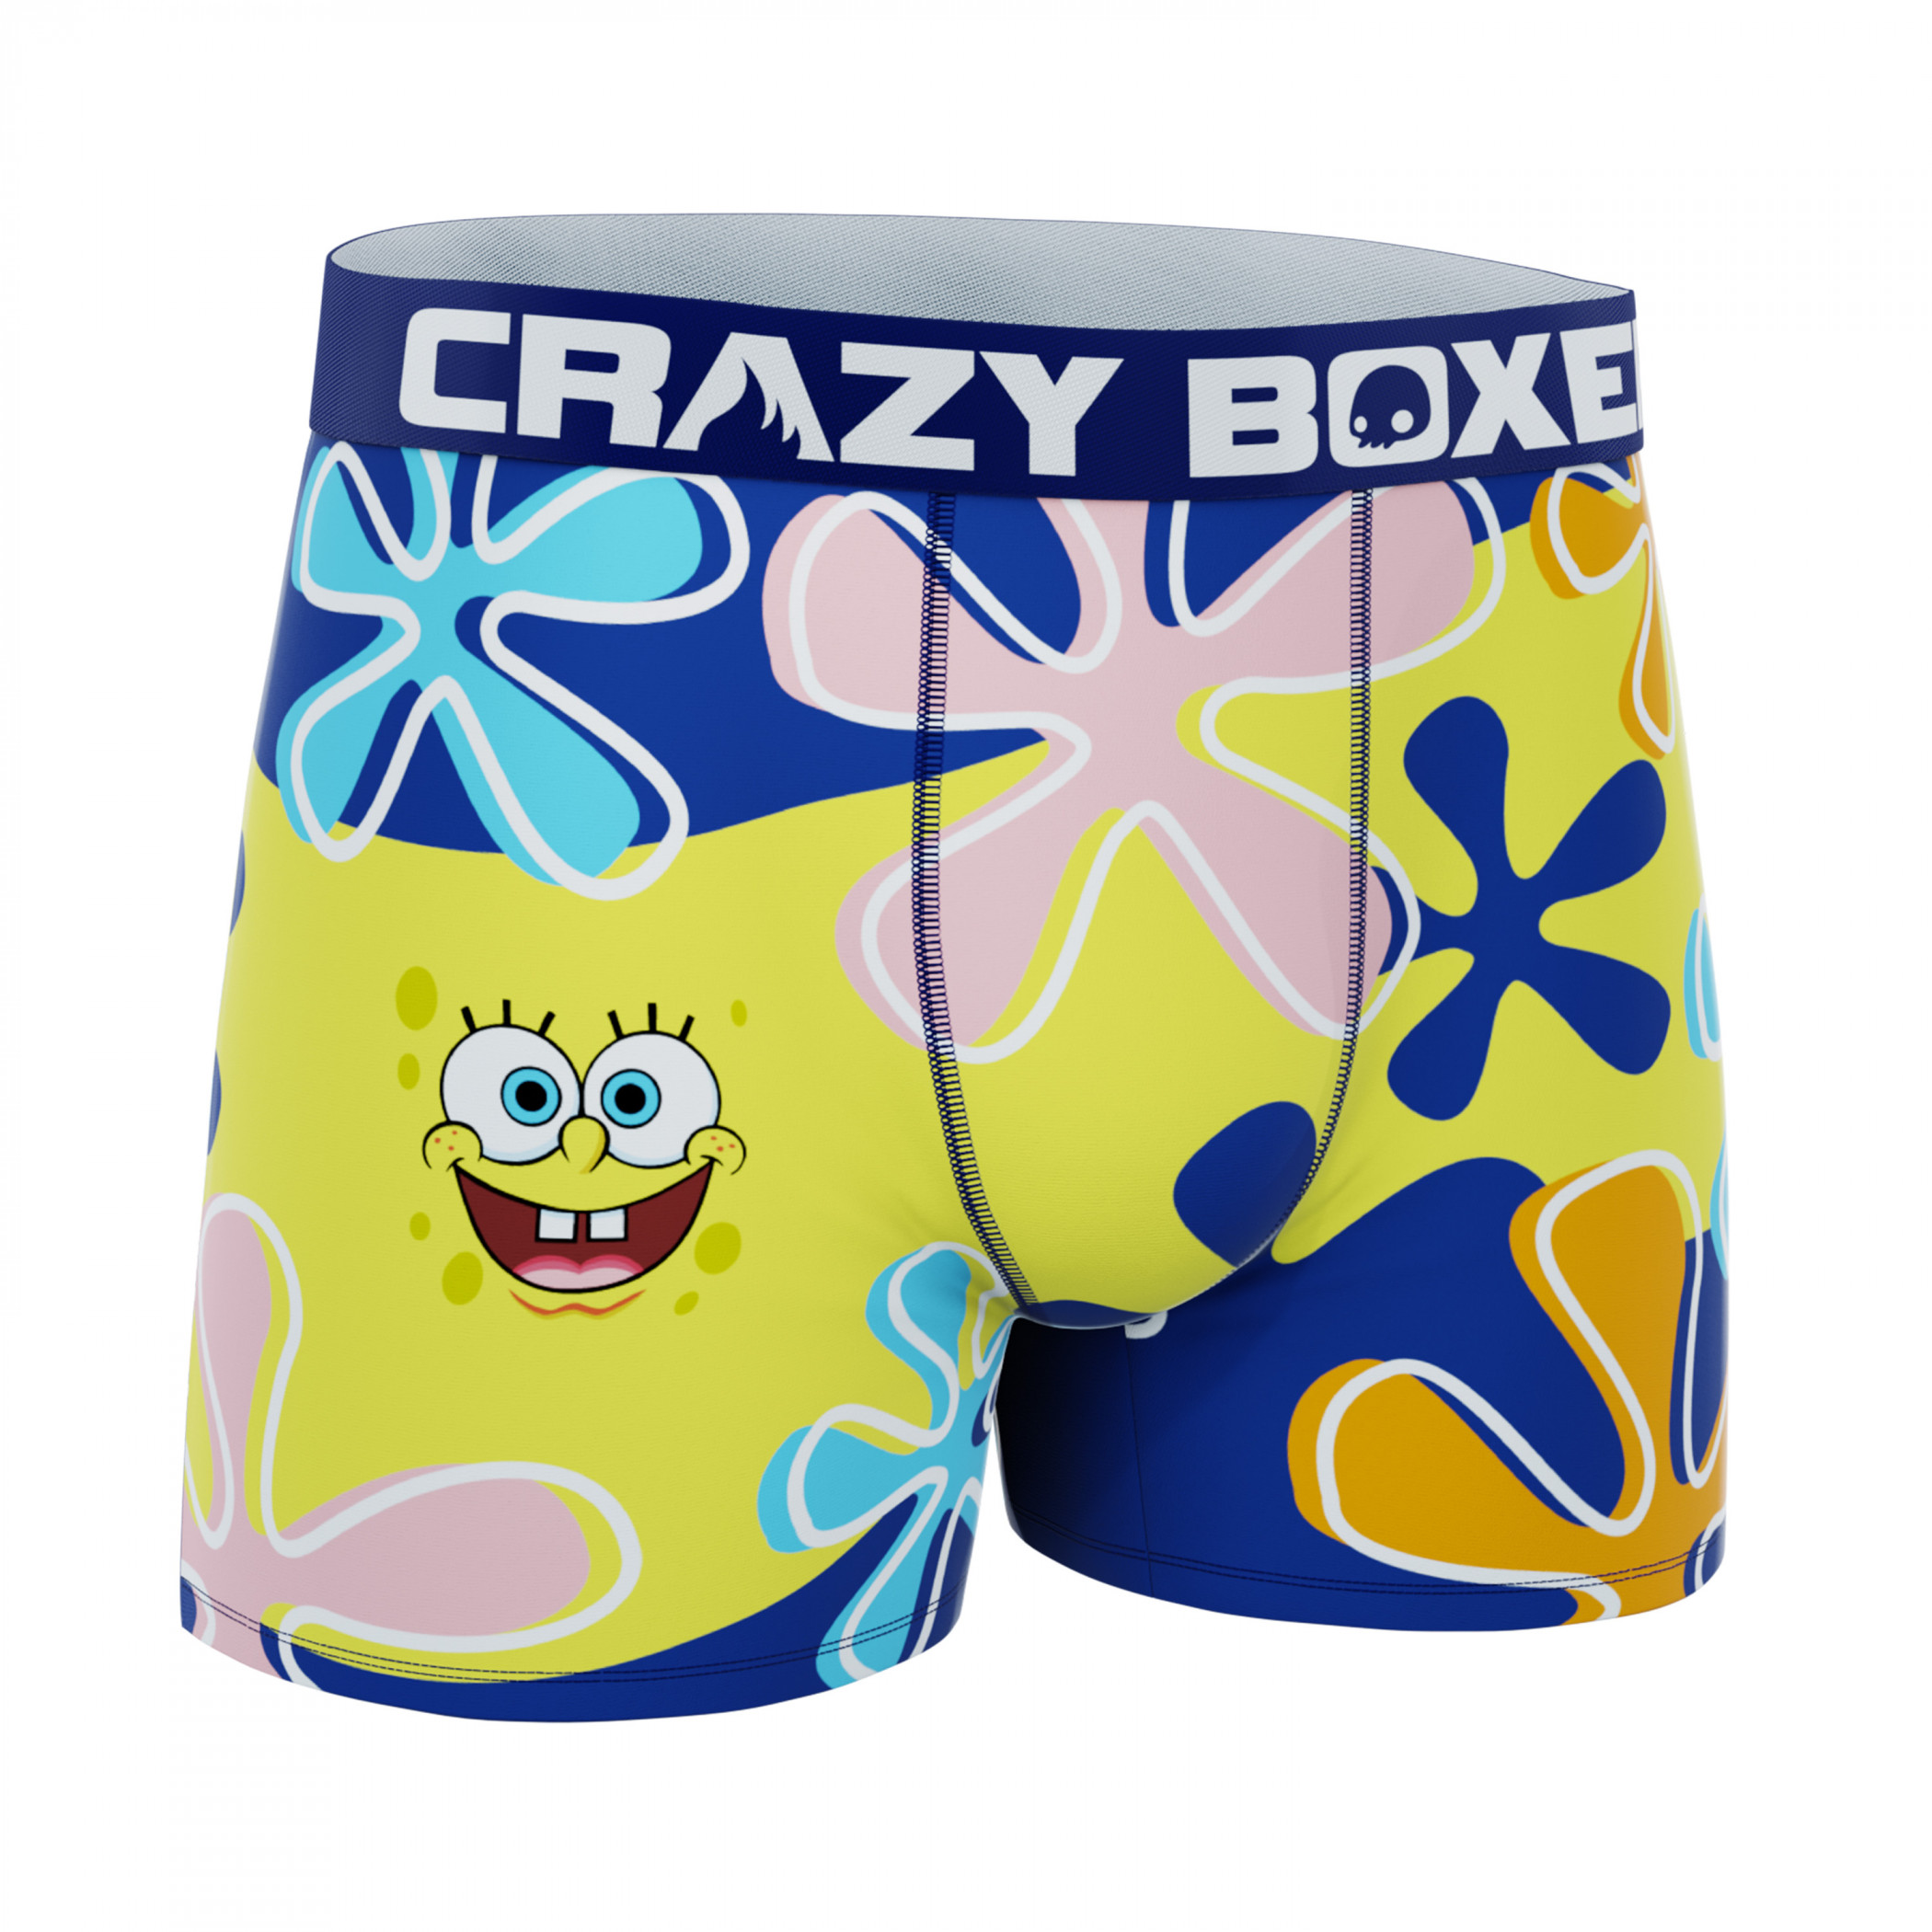 Crazy Boxers SpongeBob SquarePants Coral Reef Boxer Briefs in Gift Box